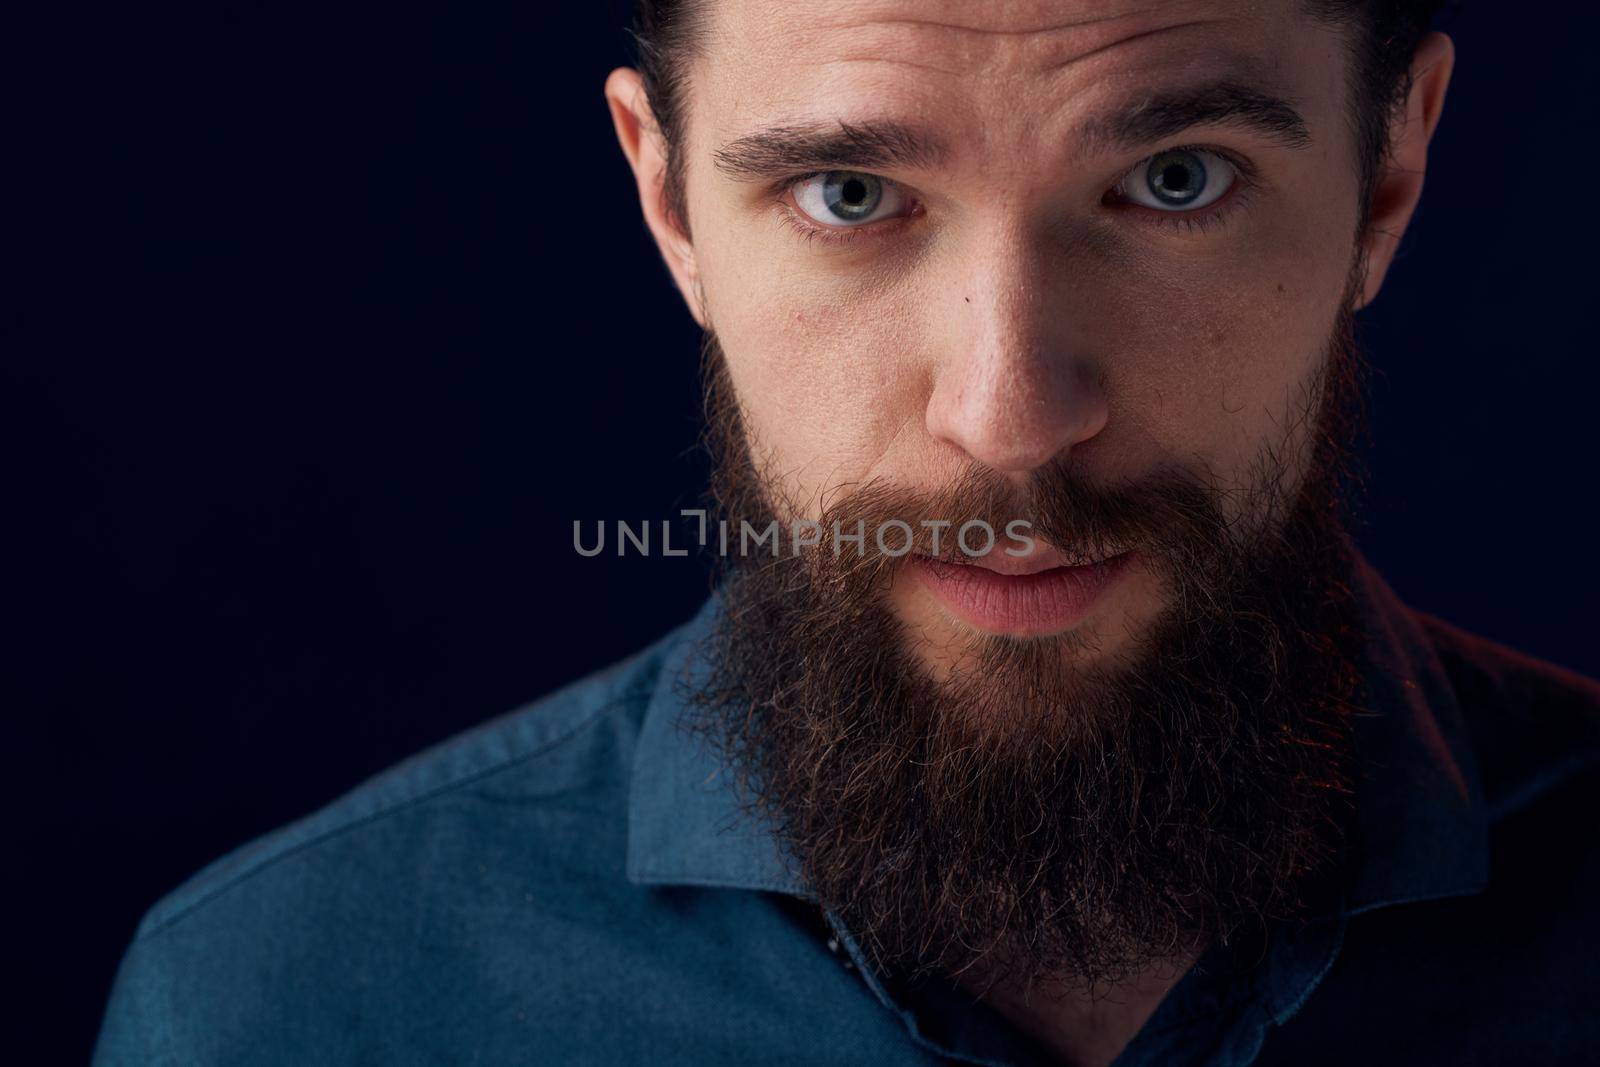 Cheerful man beard emotions black shirt close-up. High quality photo